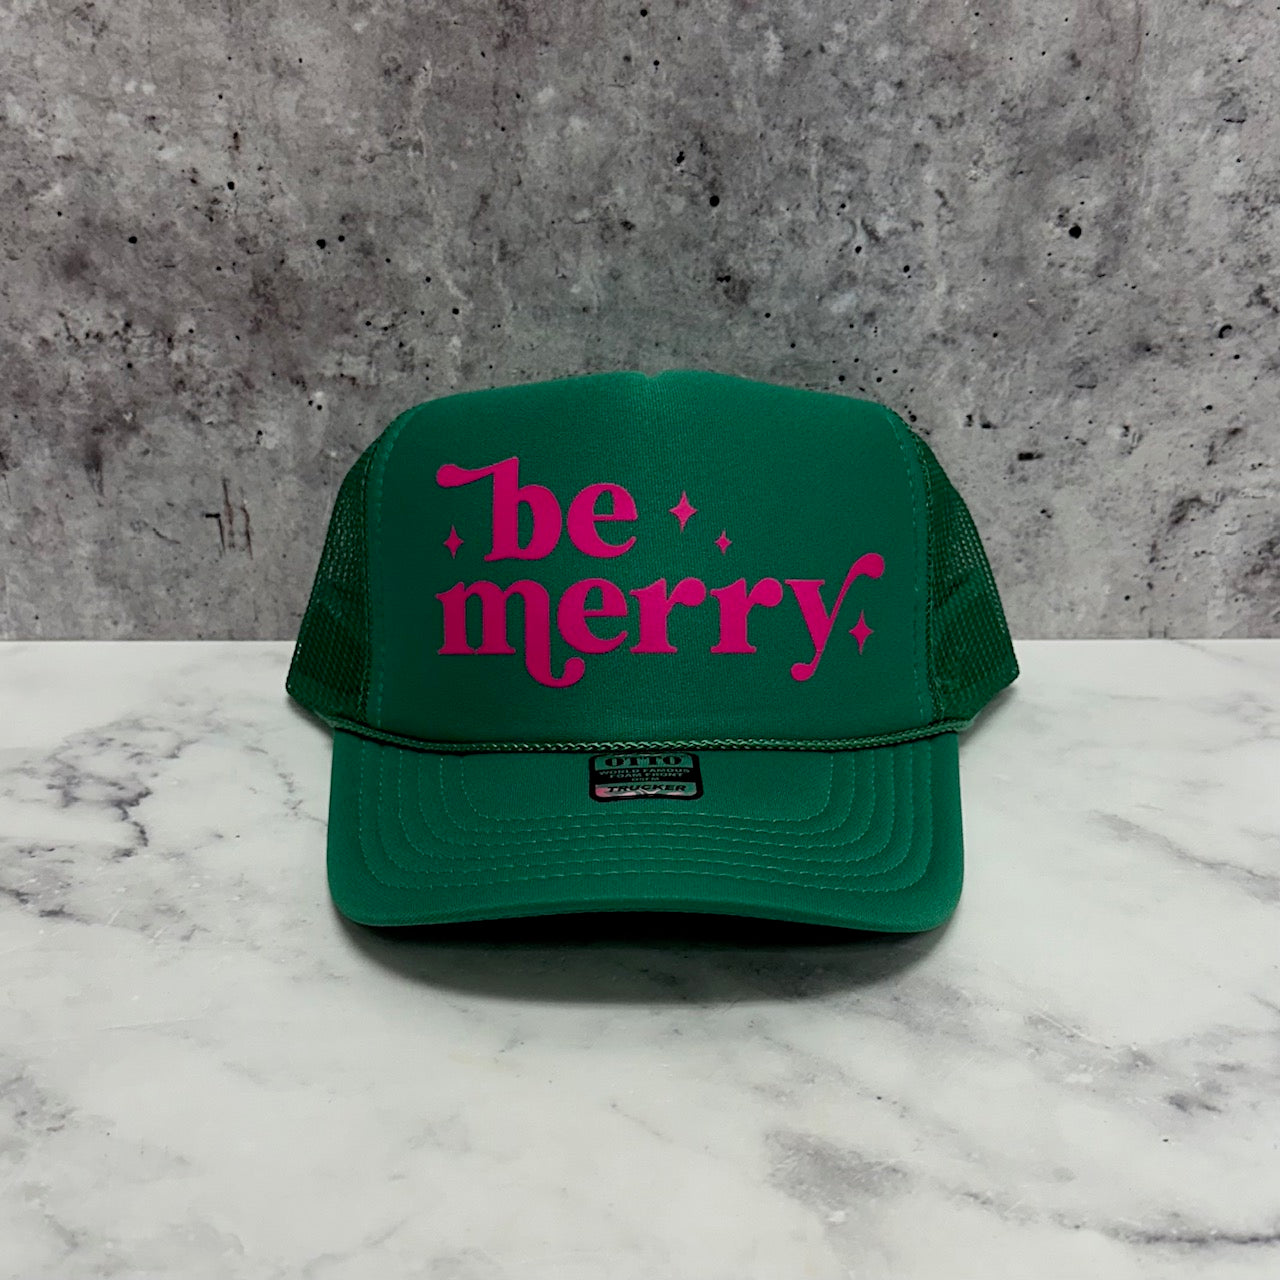 Be Merry Christmas Trucker Hat